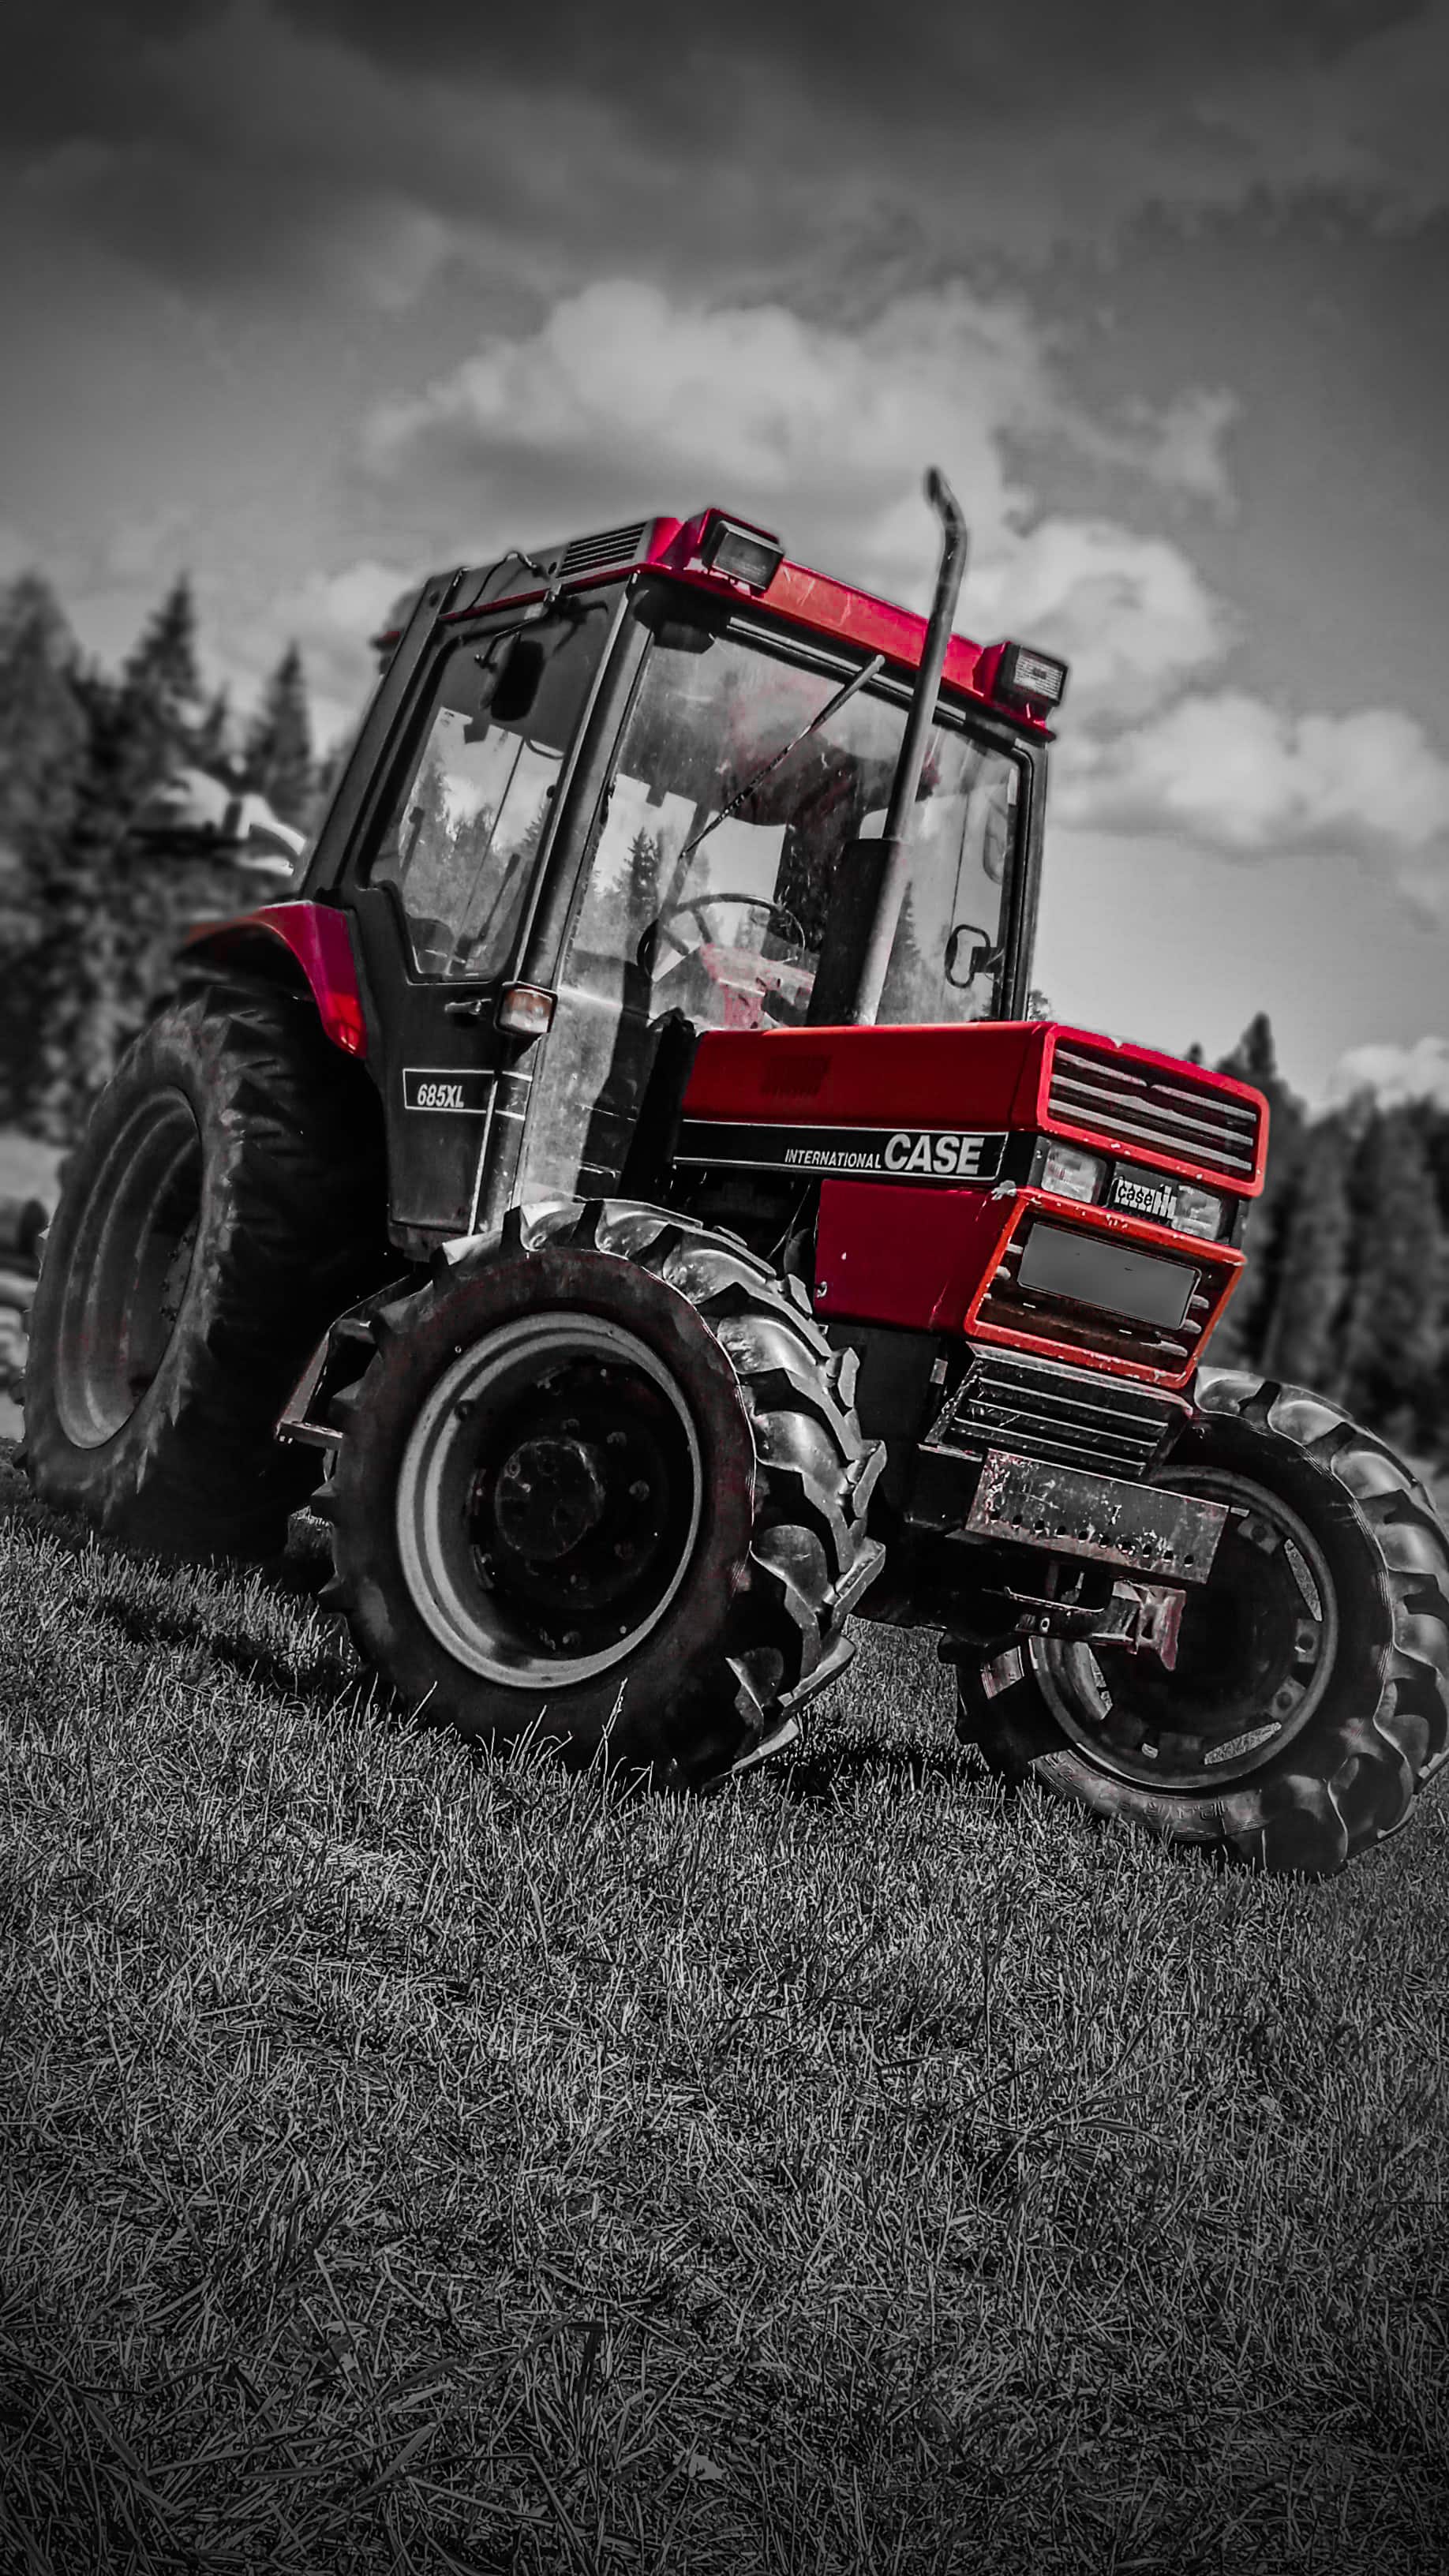 https://pixnio.com/tr/media/traktor-makine-kirmizi-arac-ekipman